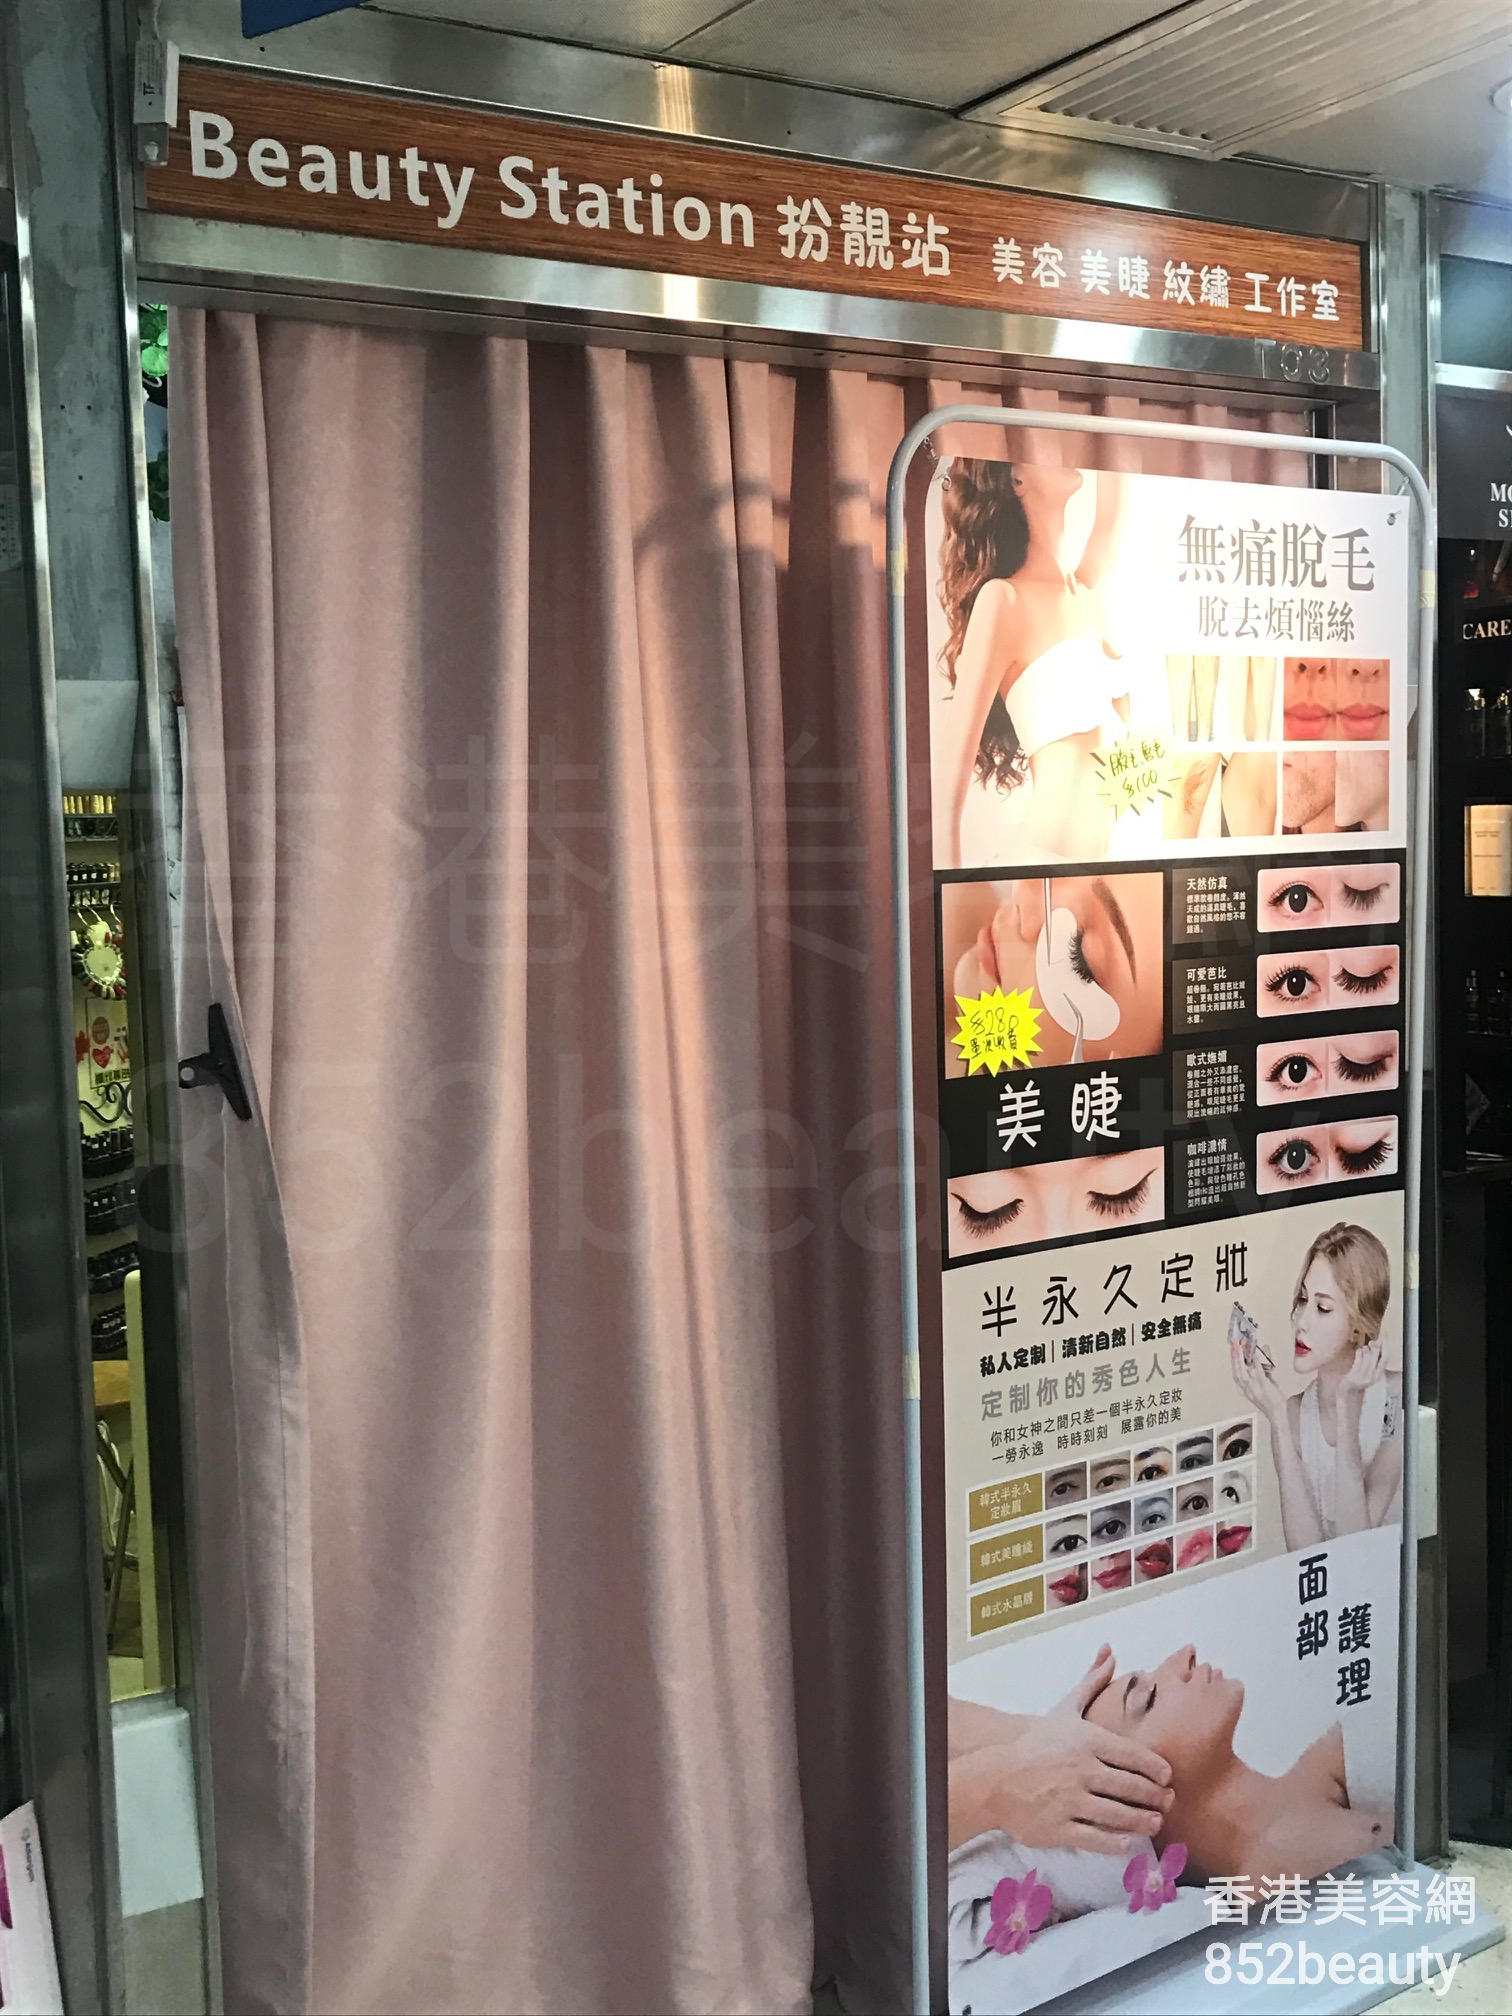 香港美容網 Hong Kong Beauty Salon 美容院 / 美容師: Beauty Station 扮靚站